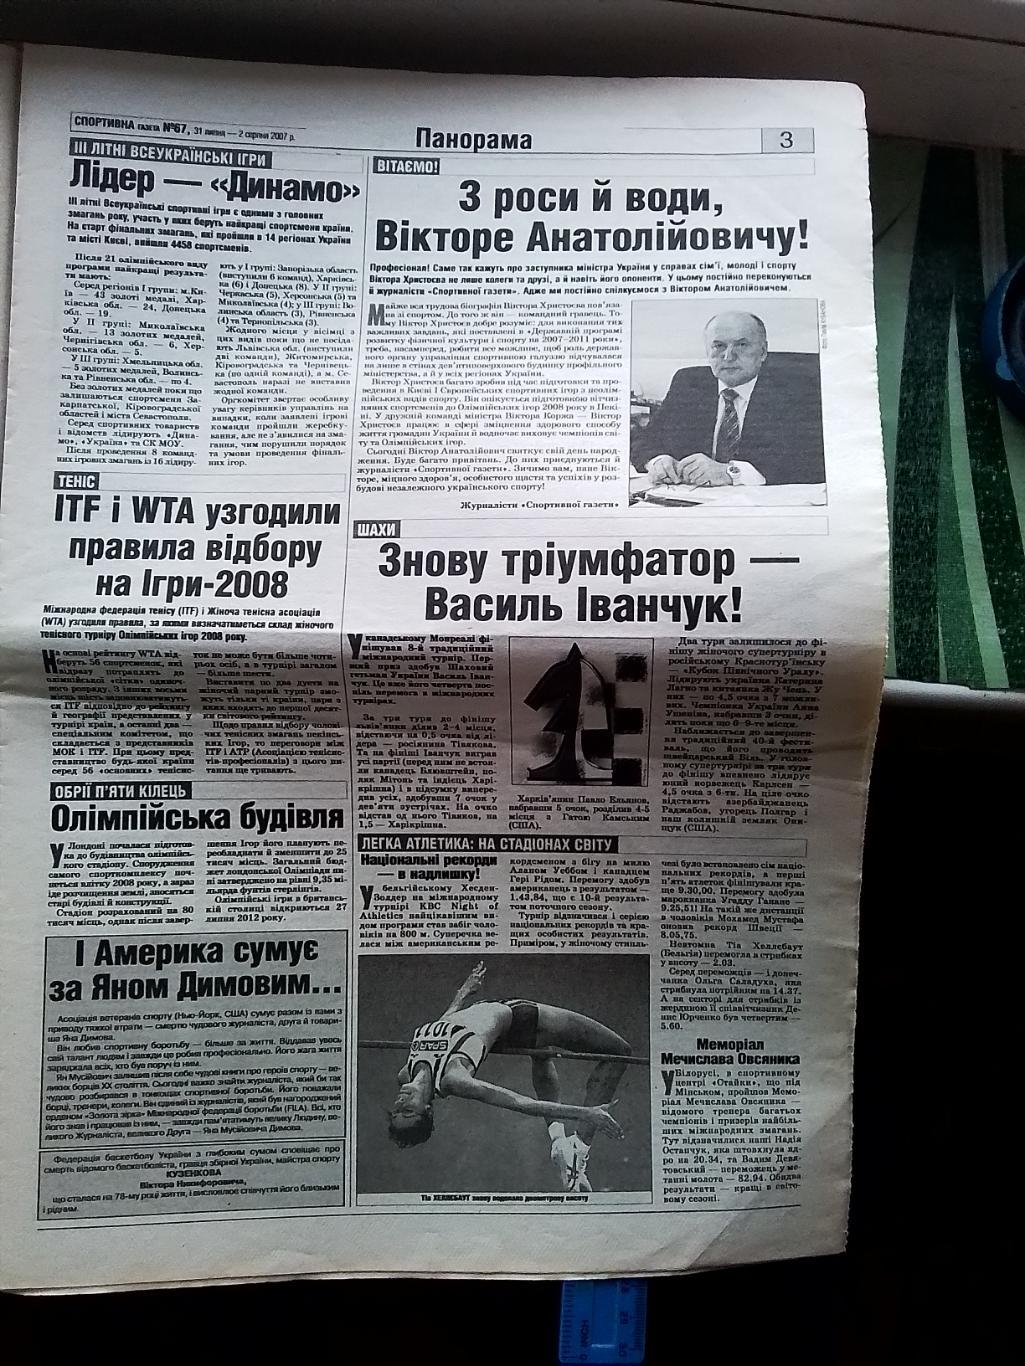 Спортивна газета 31.07 - 2. 08. 2007 N 67 (8209) 3 тур чемп Украины 1